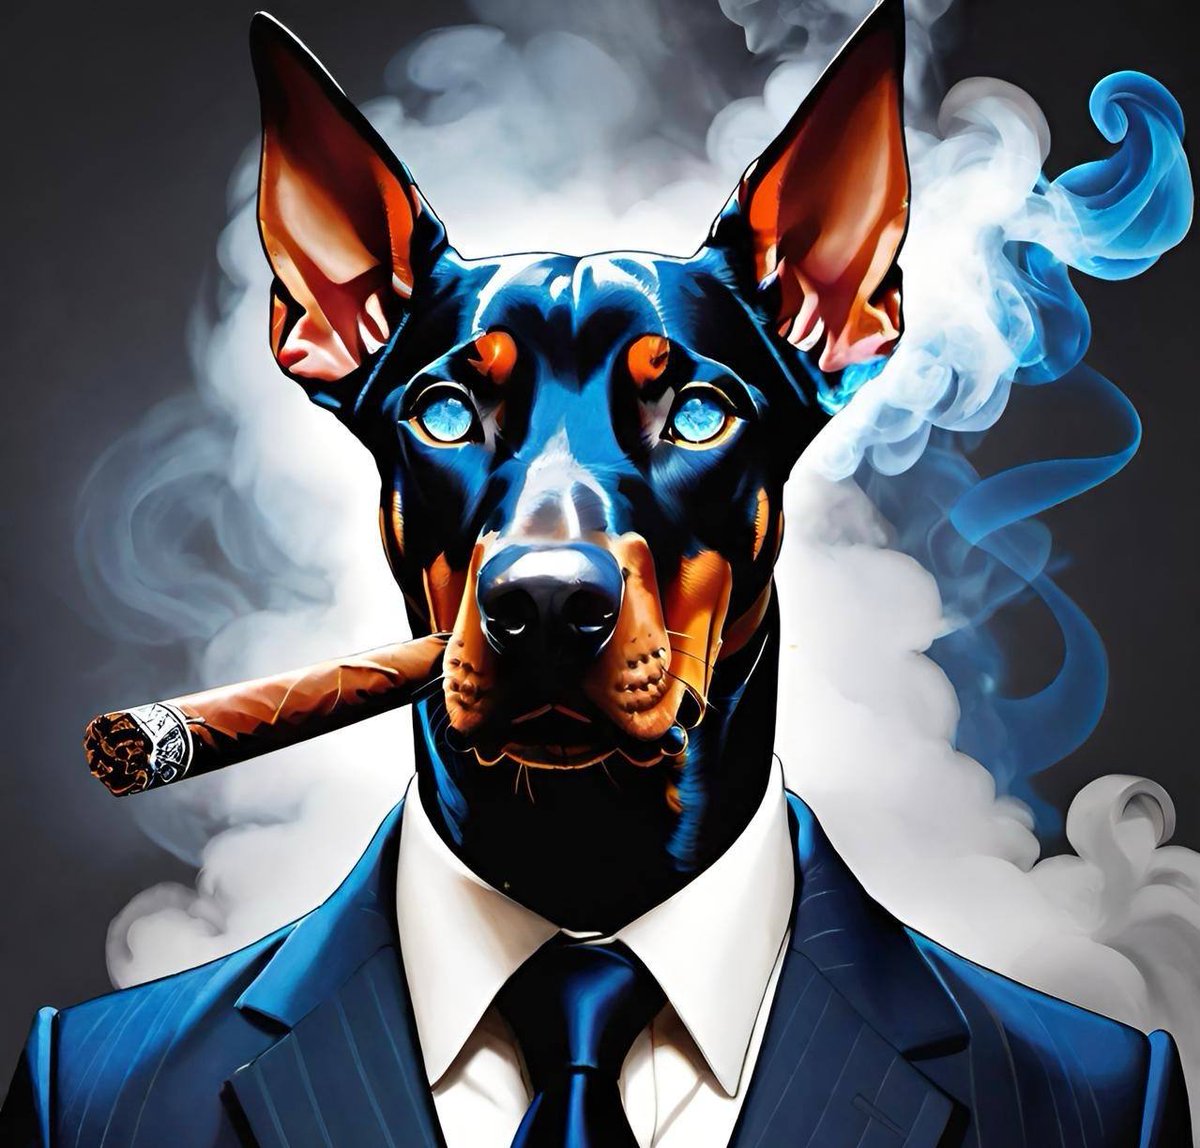 #Bossdog

The Dogfather

#1000x #1000xgem #memecoin #100xMemecoins #1000xSolGem #SolanaMemeCoins #MemeCoinSeason #Memecoin2024 #Solana #Raydium #SHIBARMY